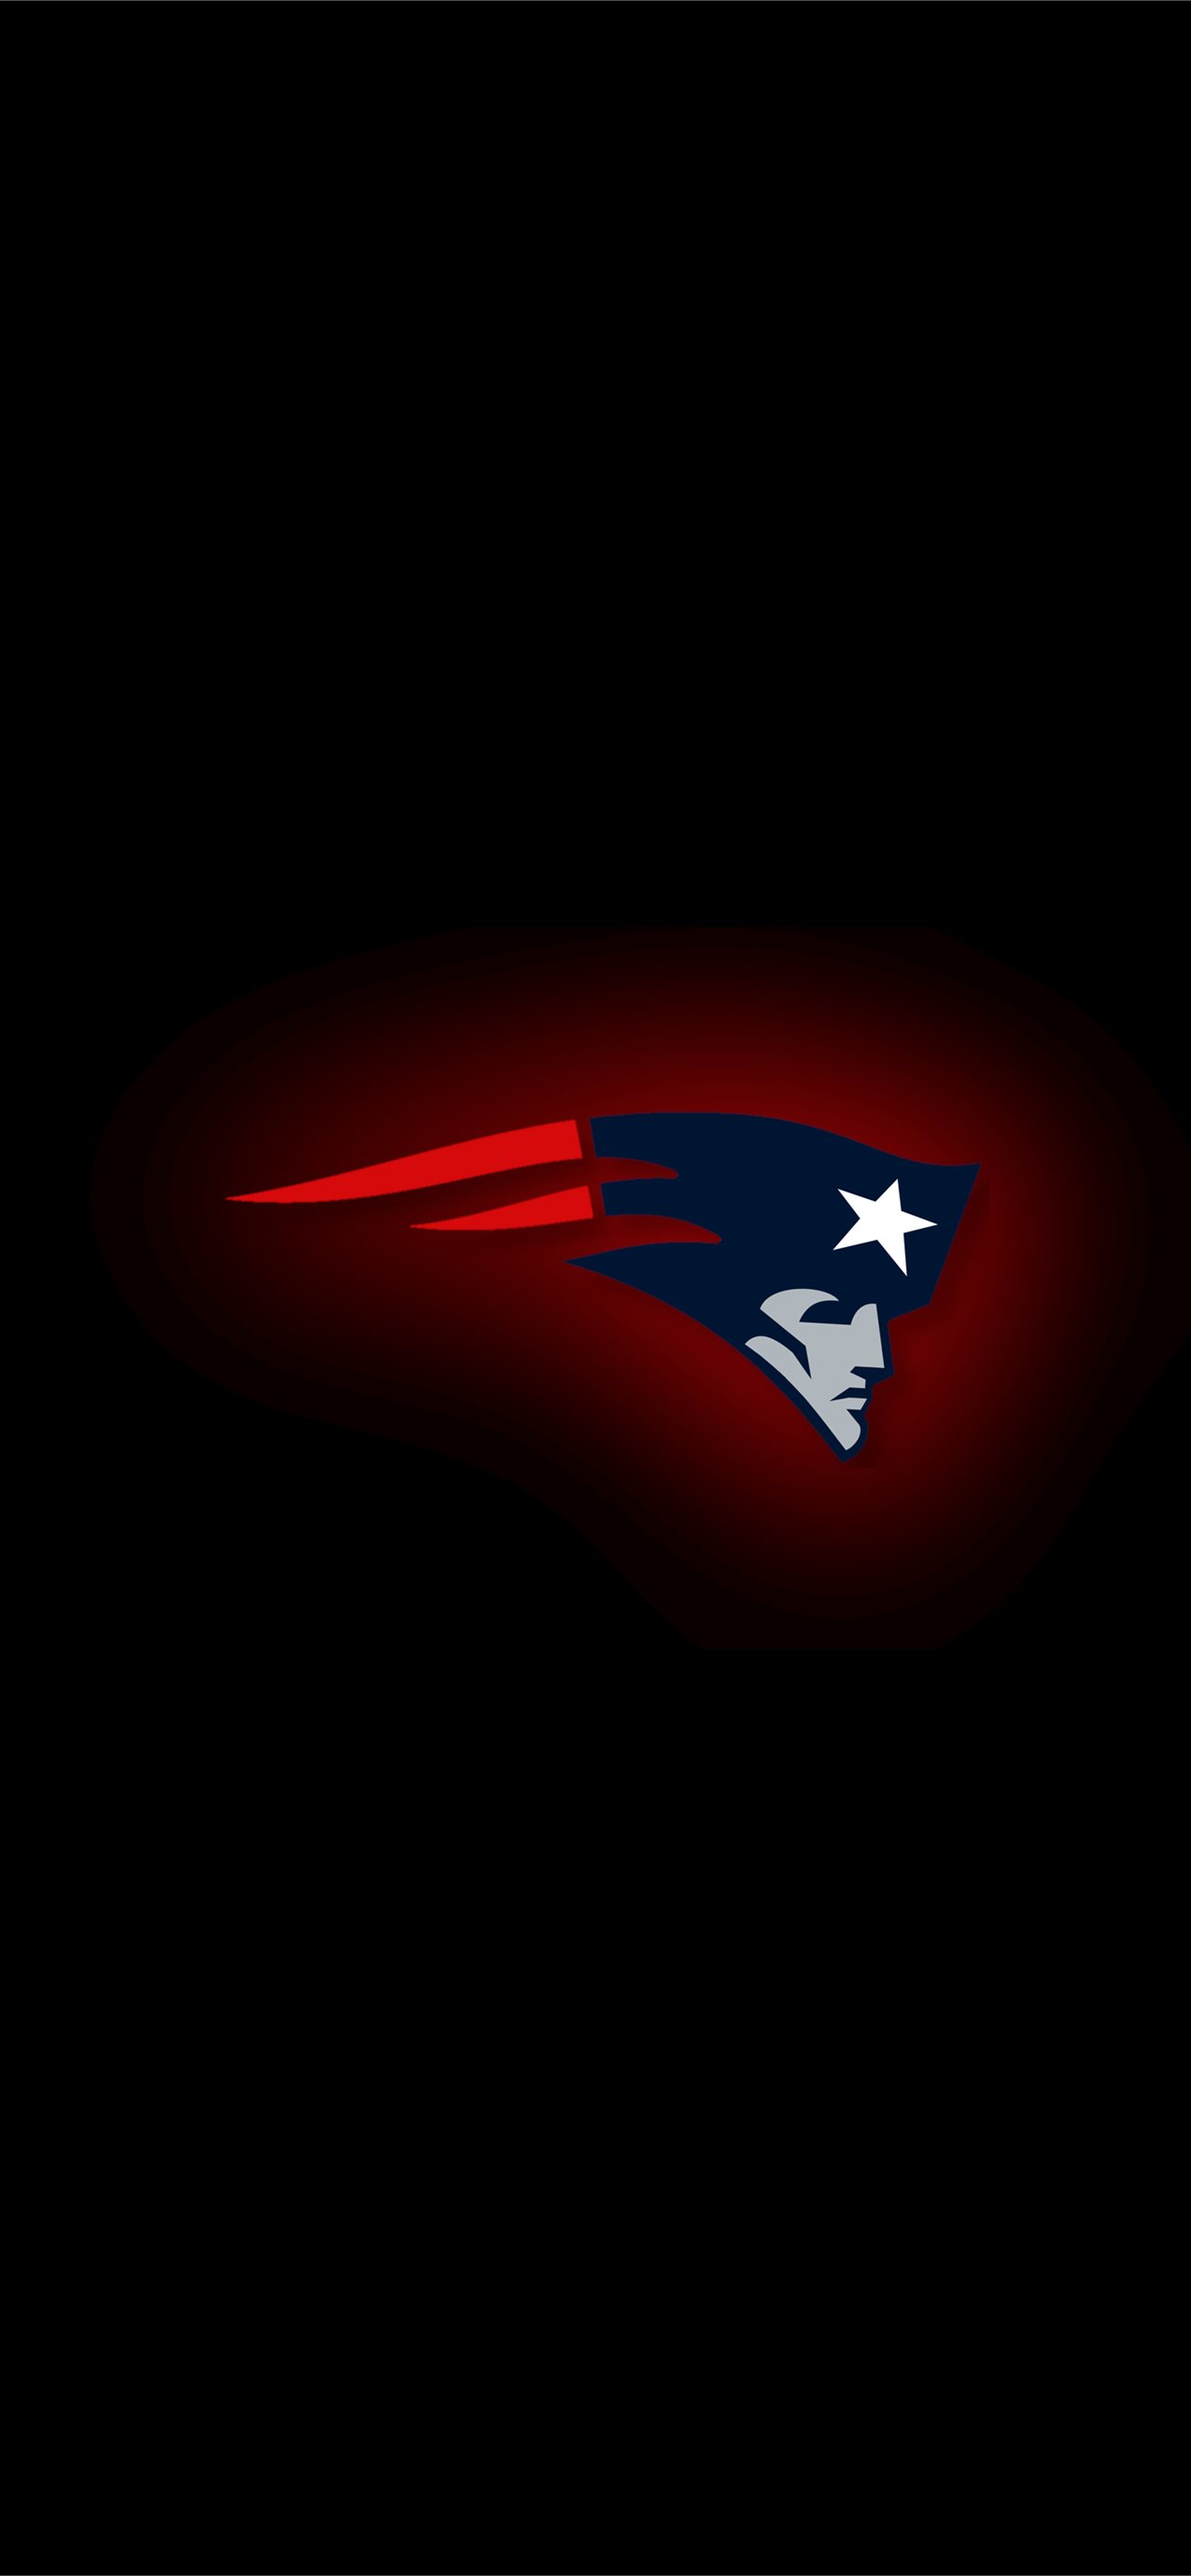 3D iPhone Wallpaper on Twitter New England Patriots iPhone 7 Wallpaper  httpstco48VHXlGCOi httpstcoTpPxizSCDb  X